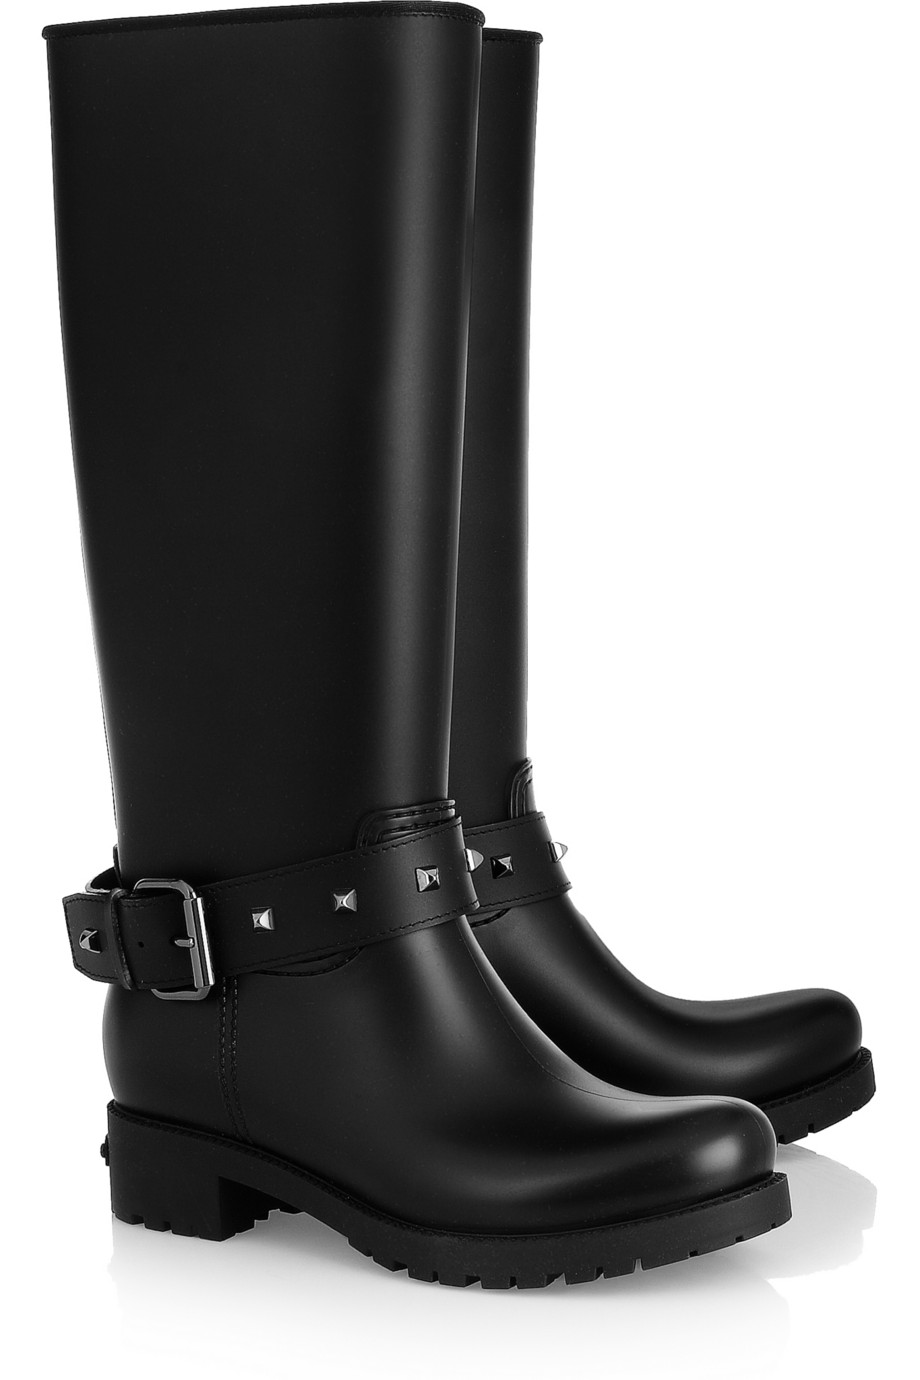 Karl Lagerfeld Studded Rubber Wellington Boots in Black - Lyst